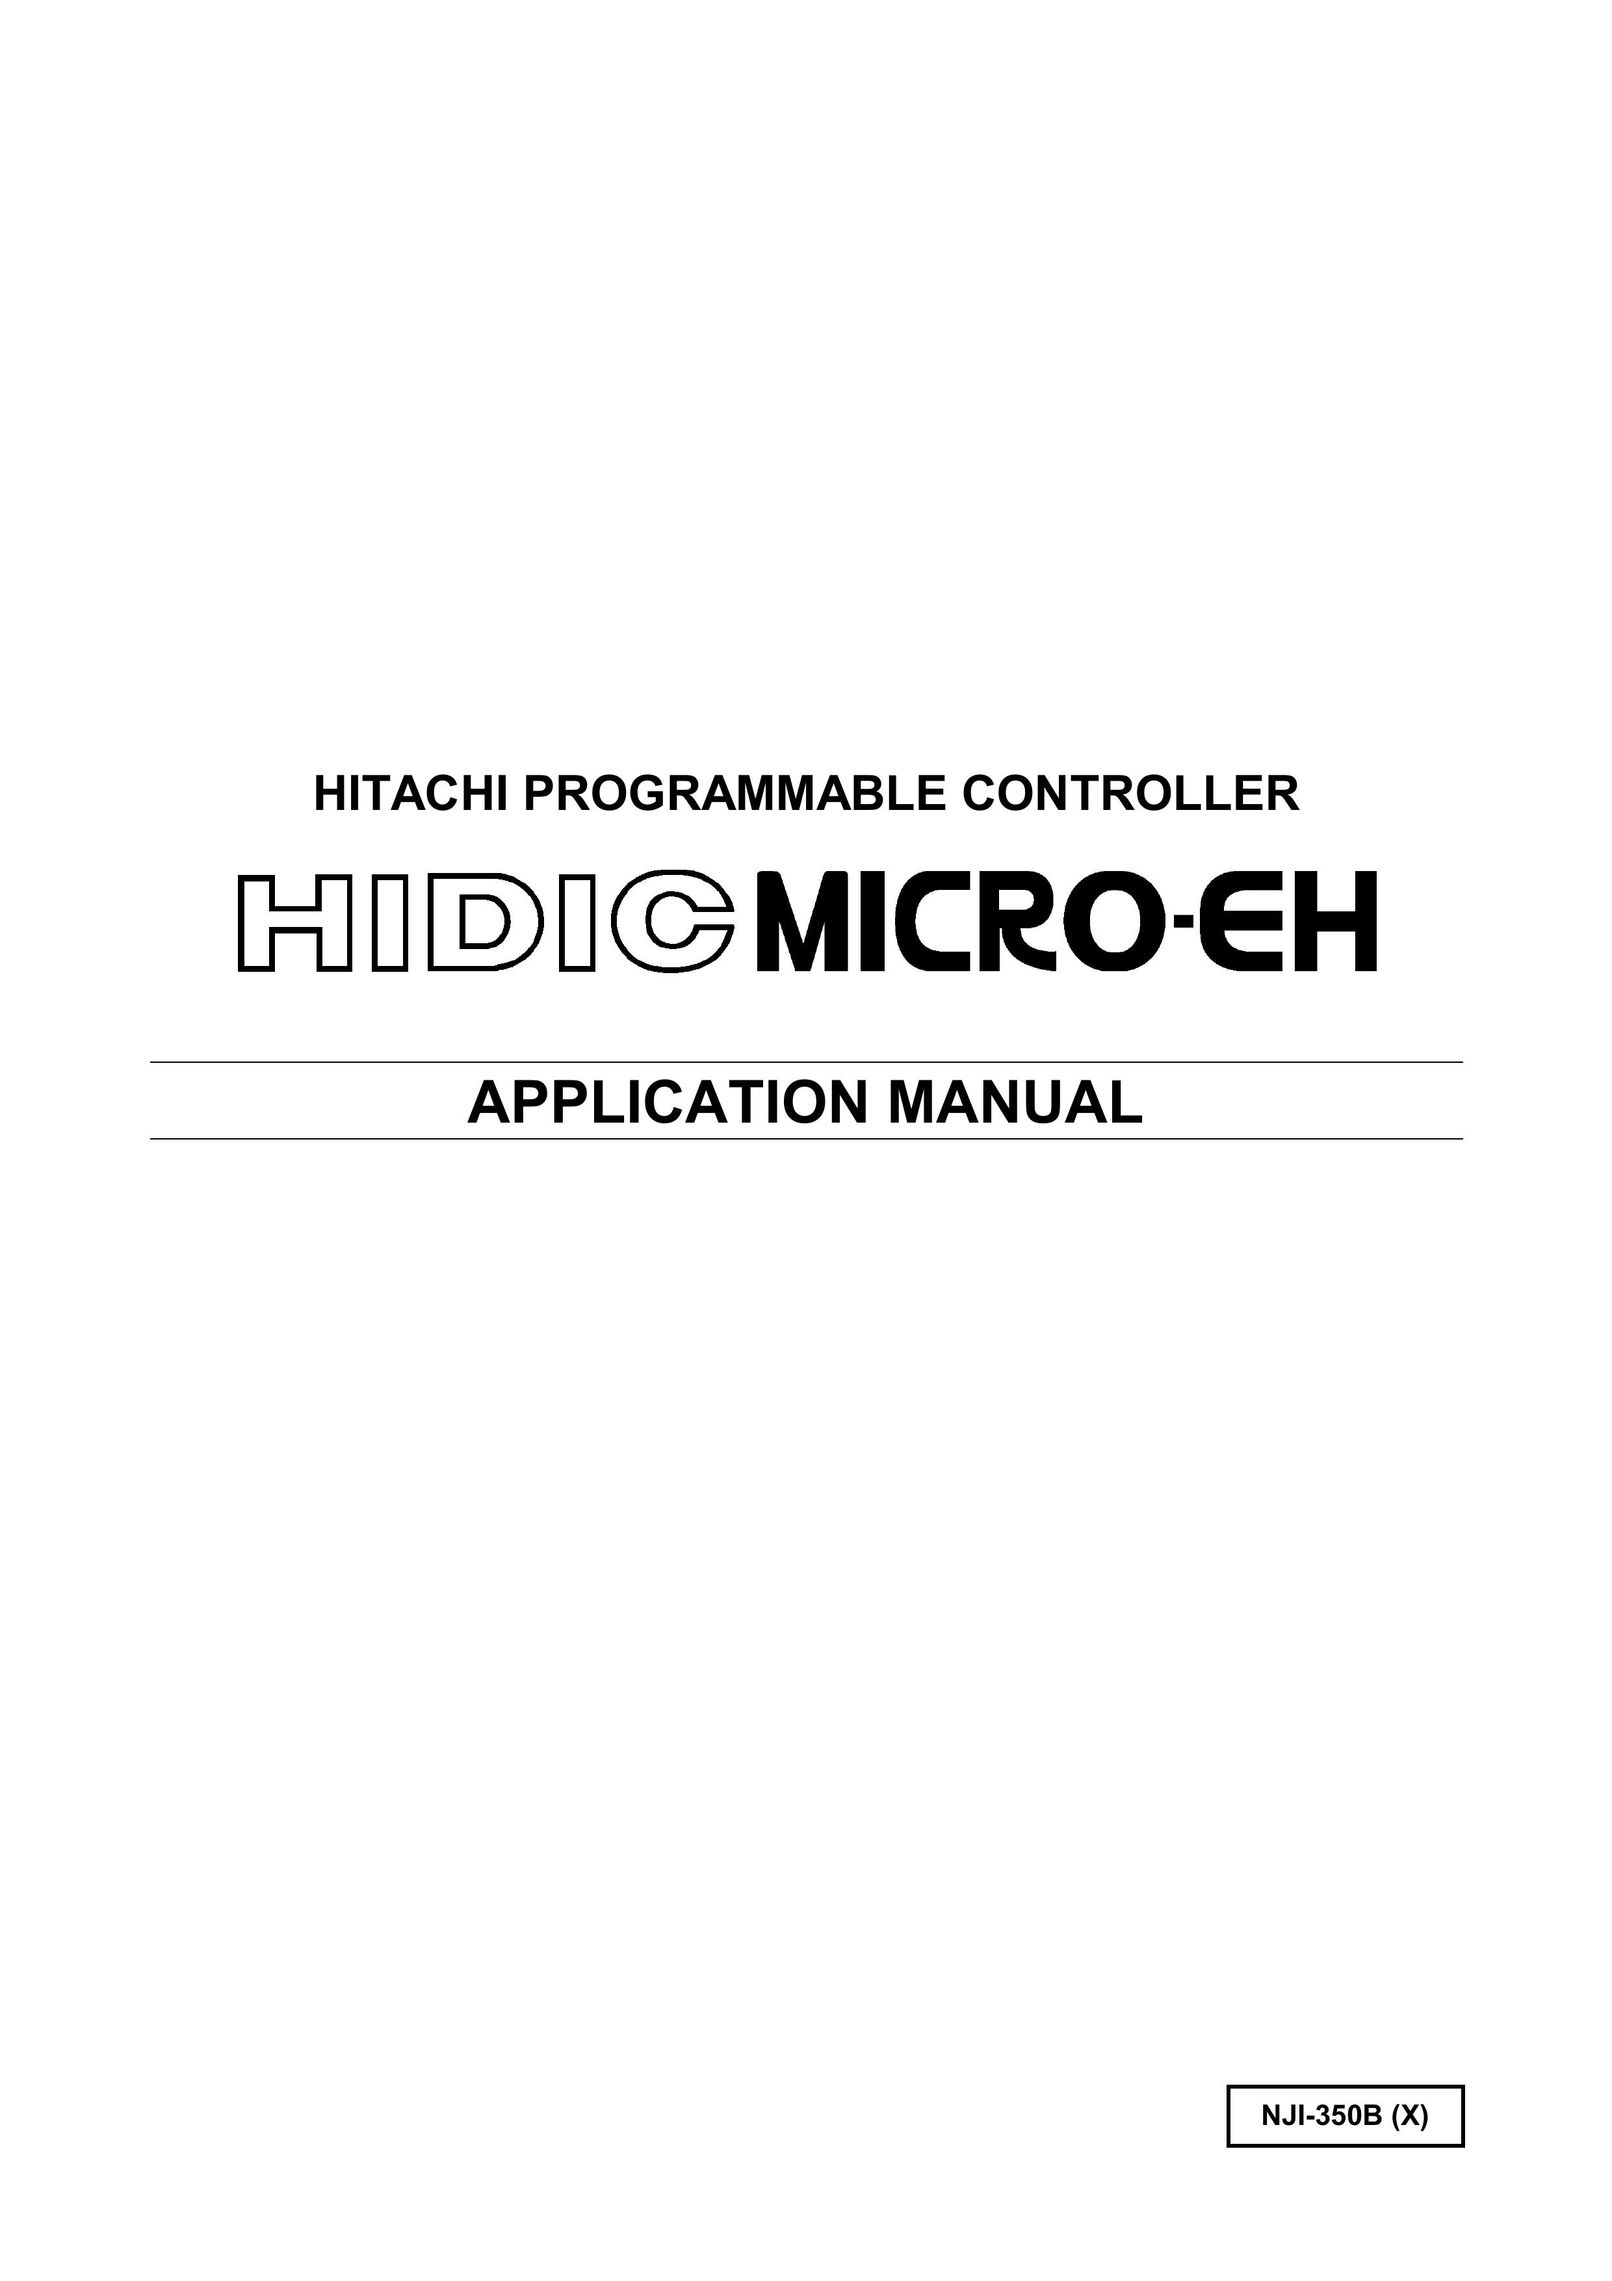 Hitachi NJI-350B Video Game Controller User Manual